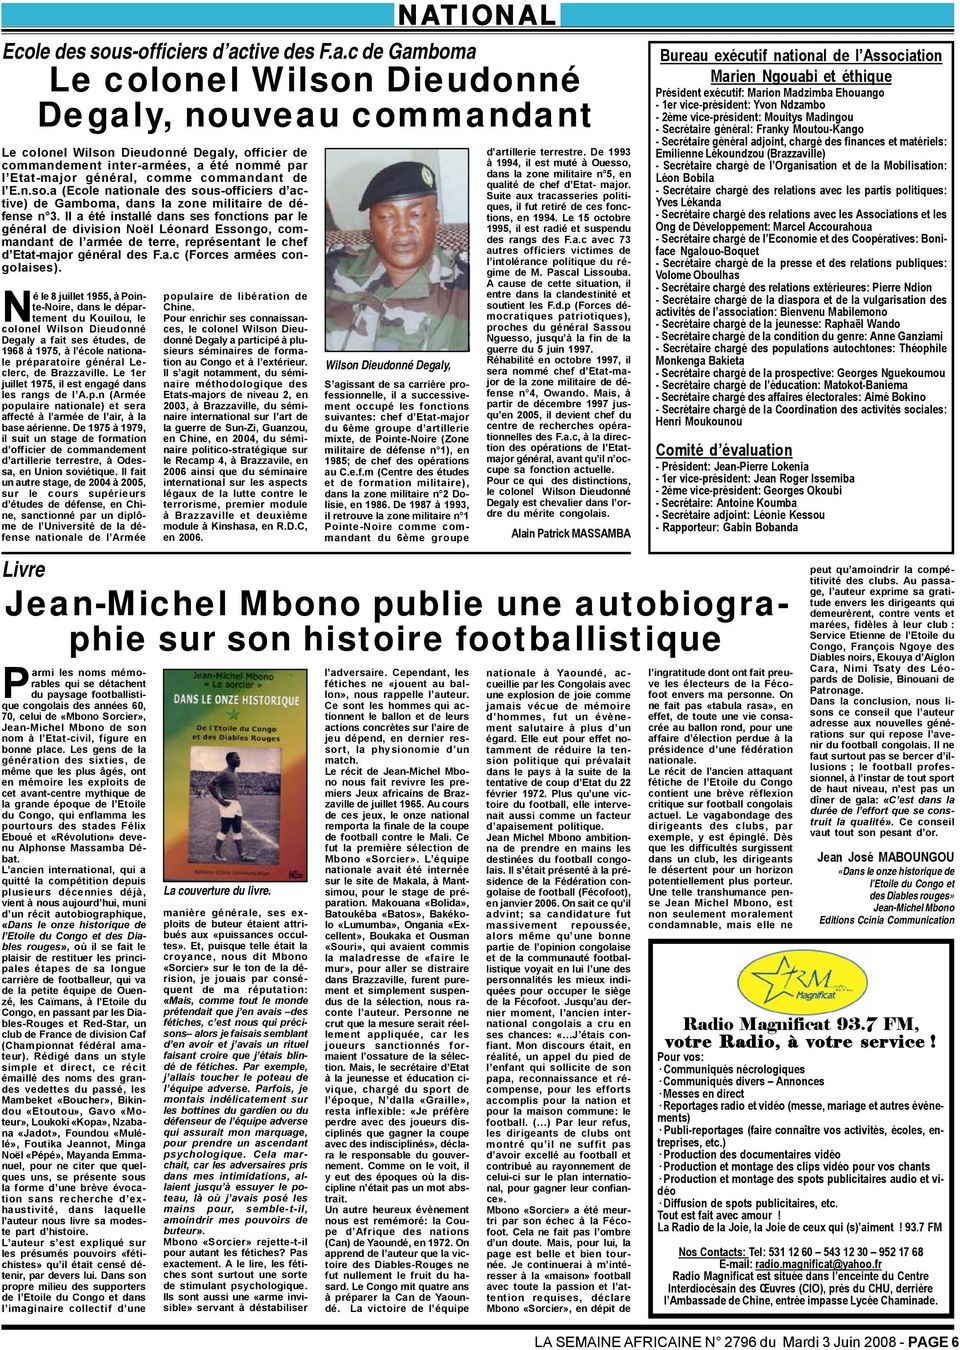 stades Félix Eboué et «Révolution» devenu Alphonse Massamba Débat.